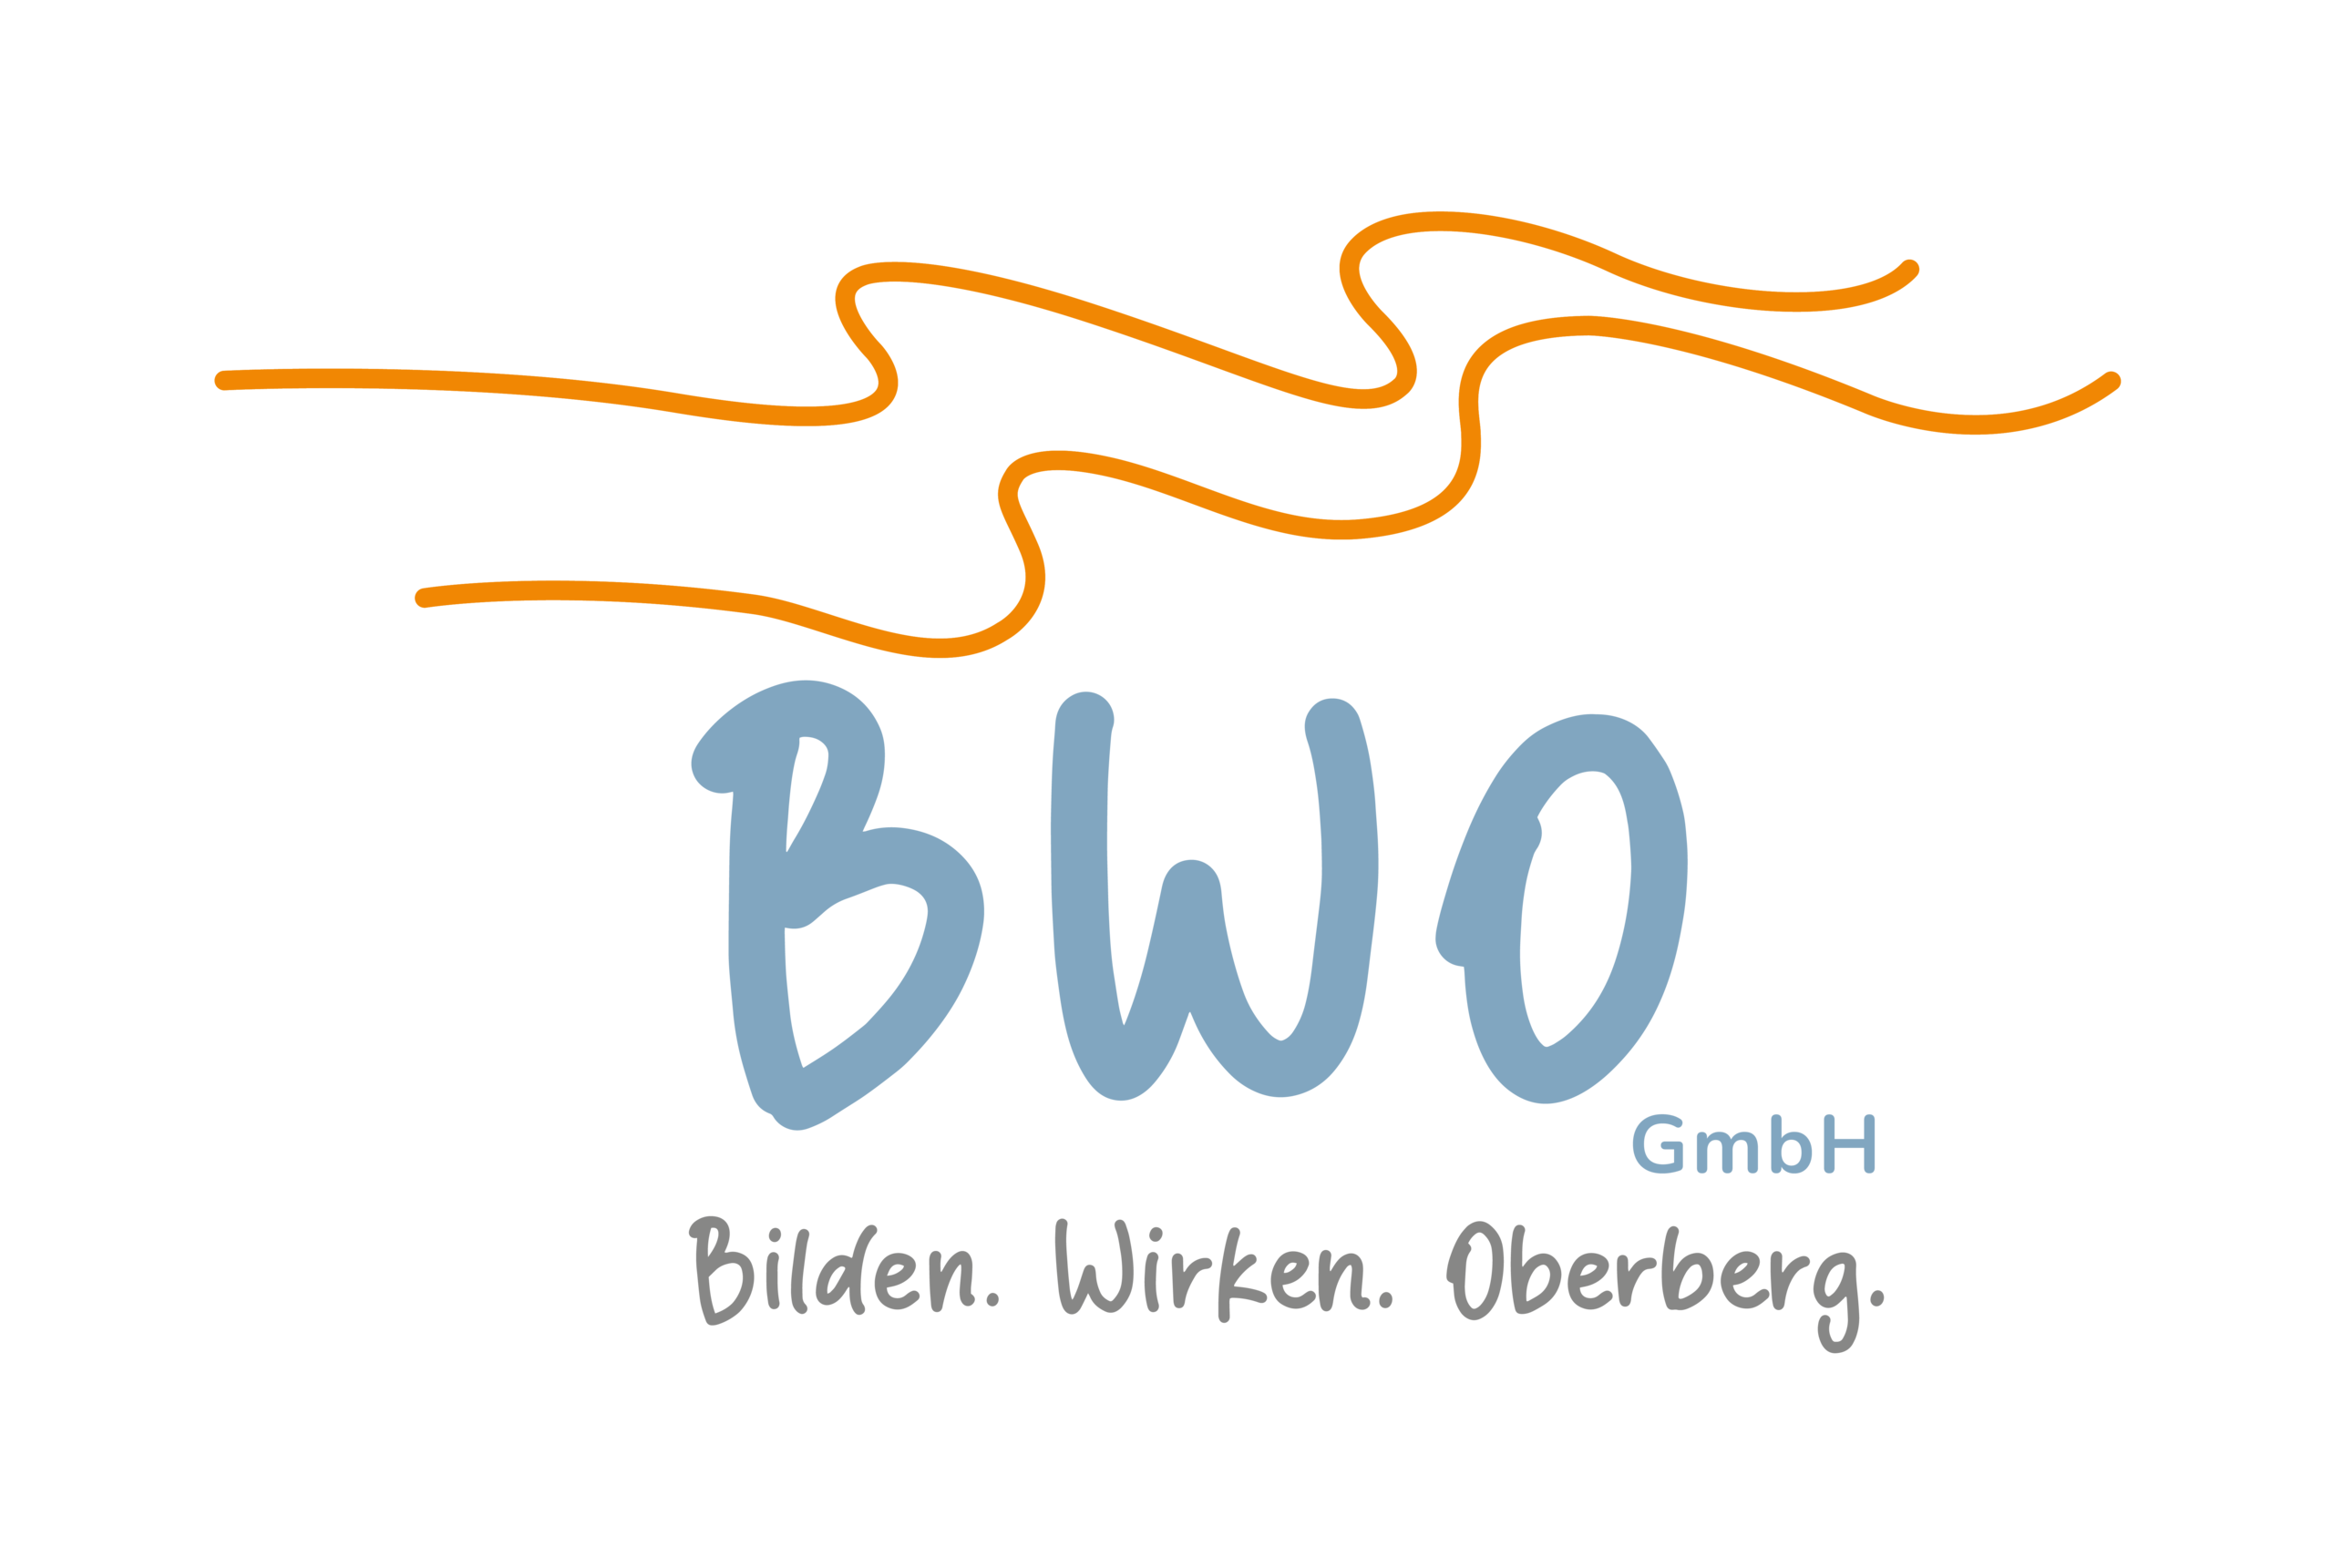 BWO Bilden. Wirken. Oberberg. GmbH